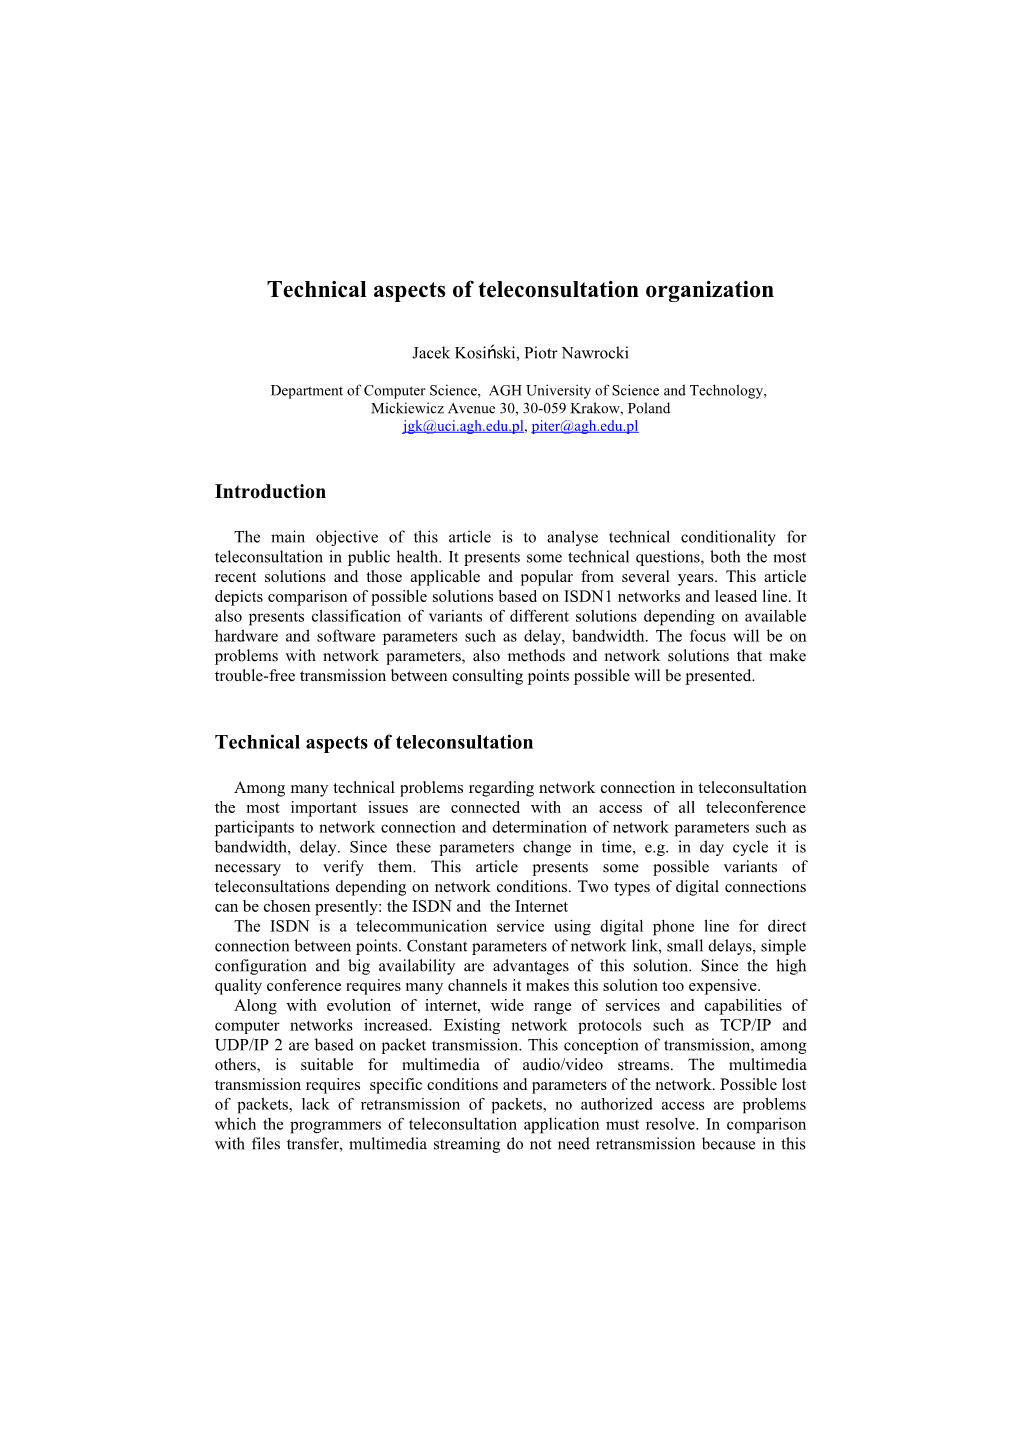 Technical Aspects of Teleconsultation Organization